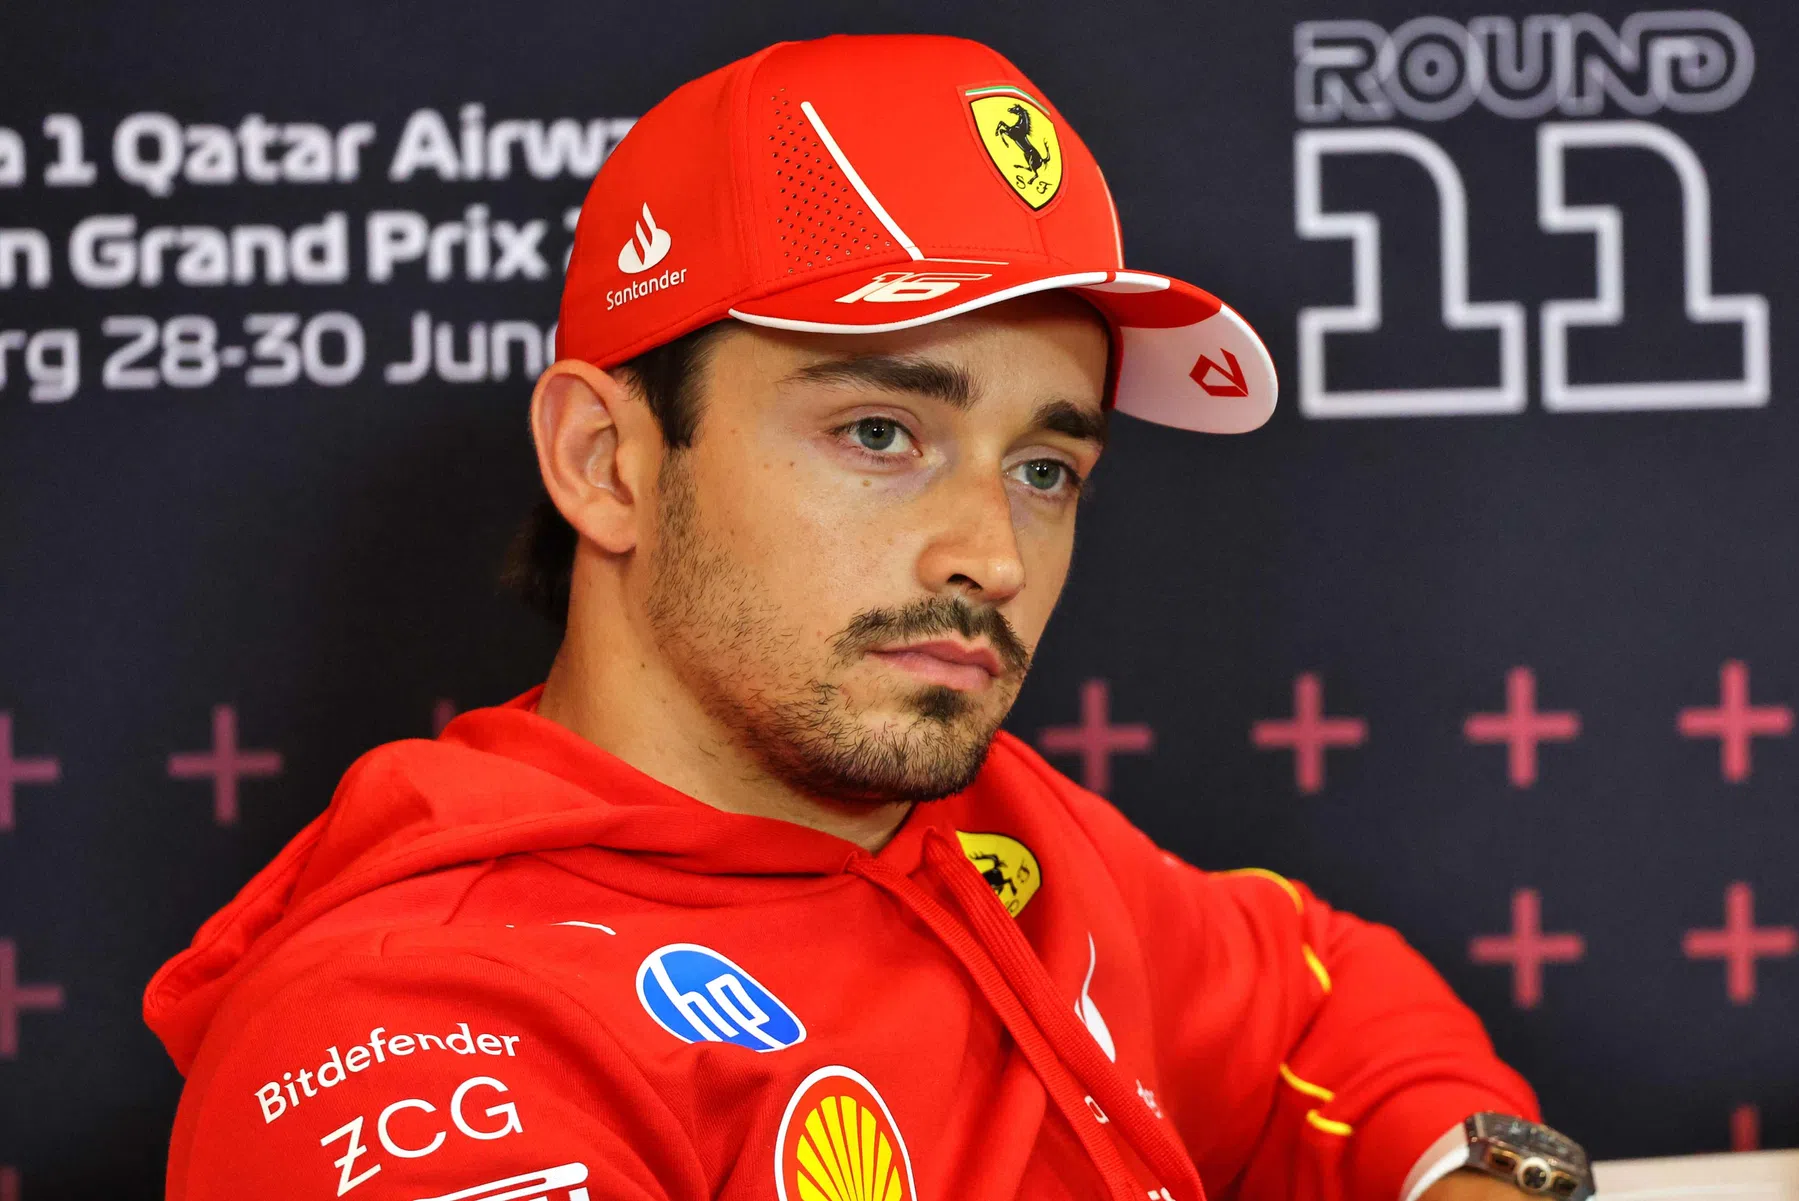 Pessimista, Leclerc olha para Silverstone